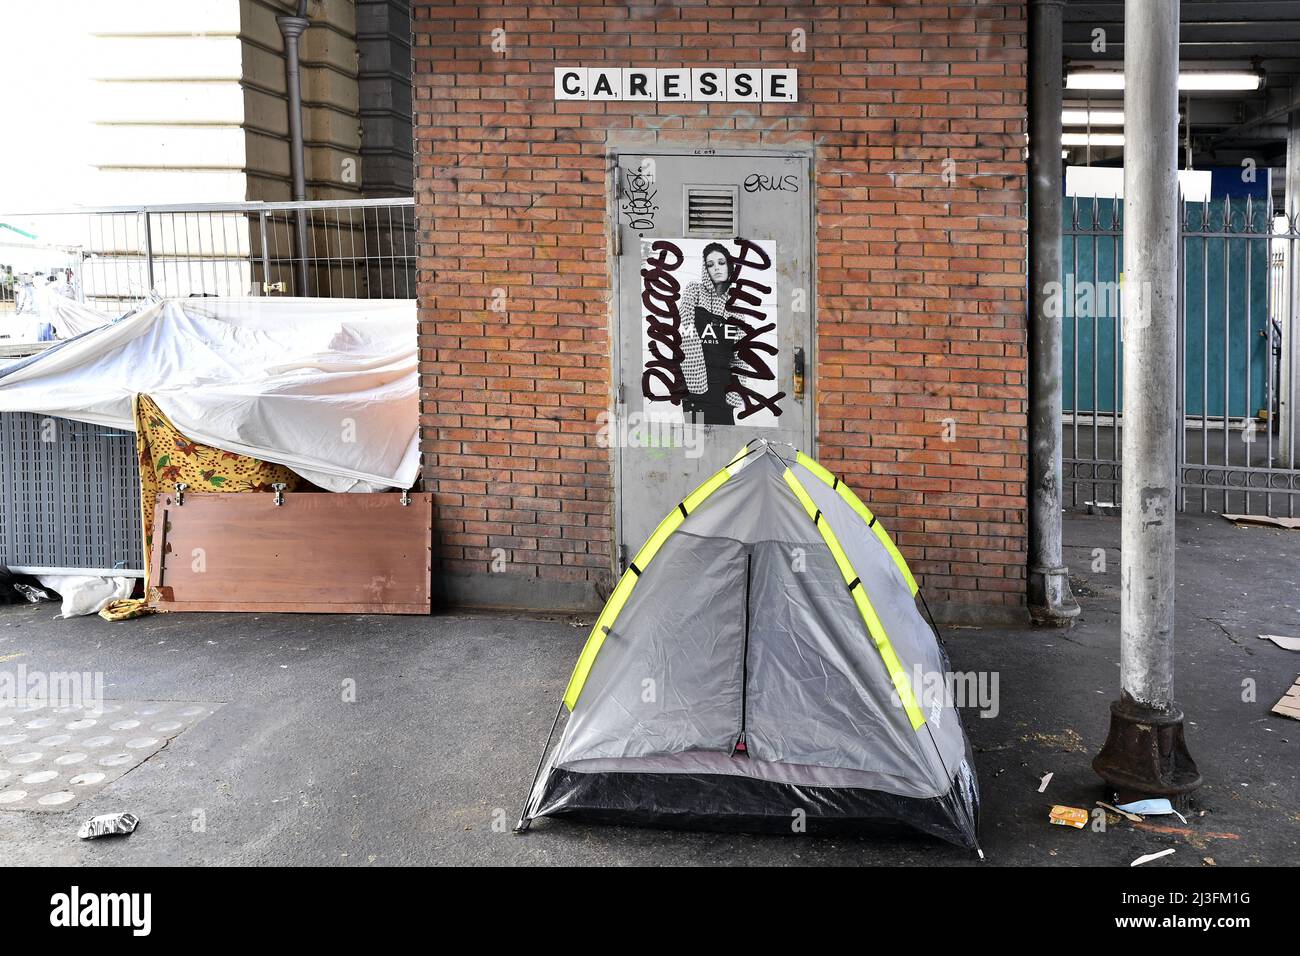 Homeless tent - Paris - France Stock Photo